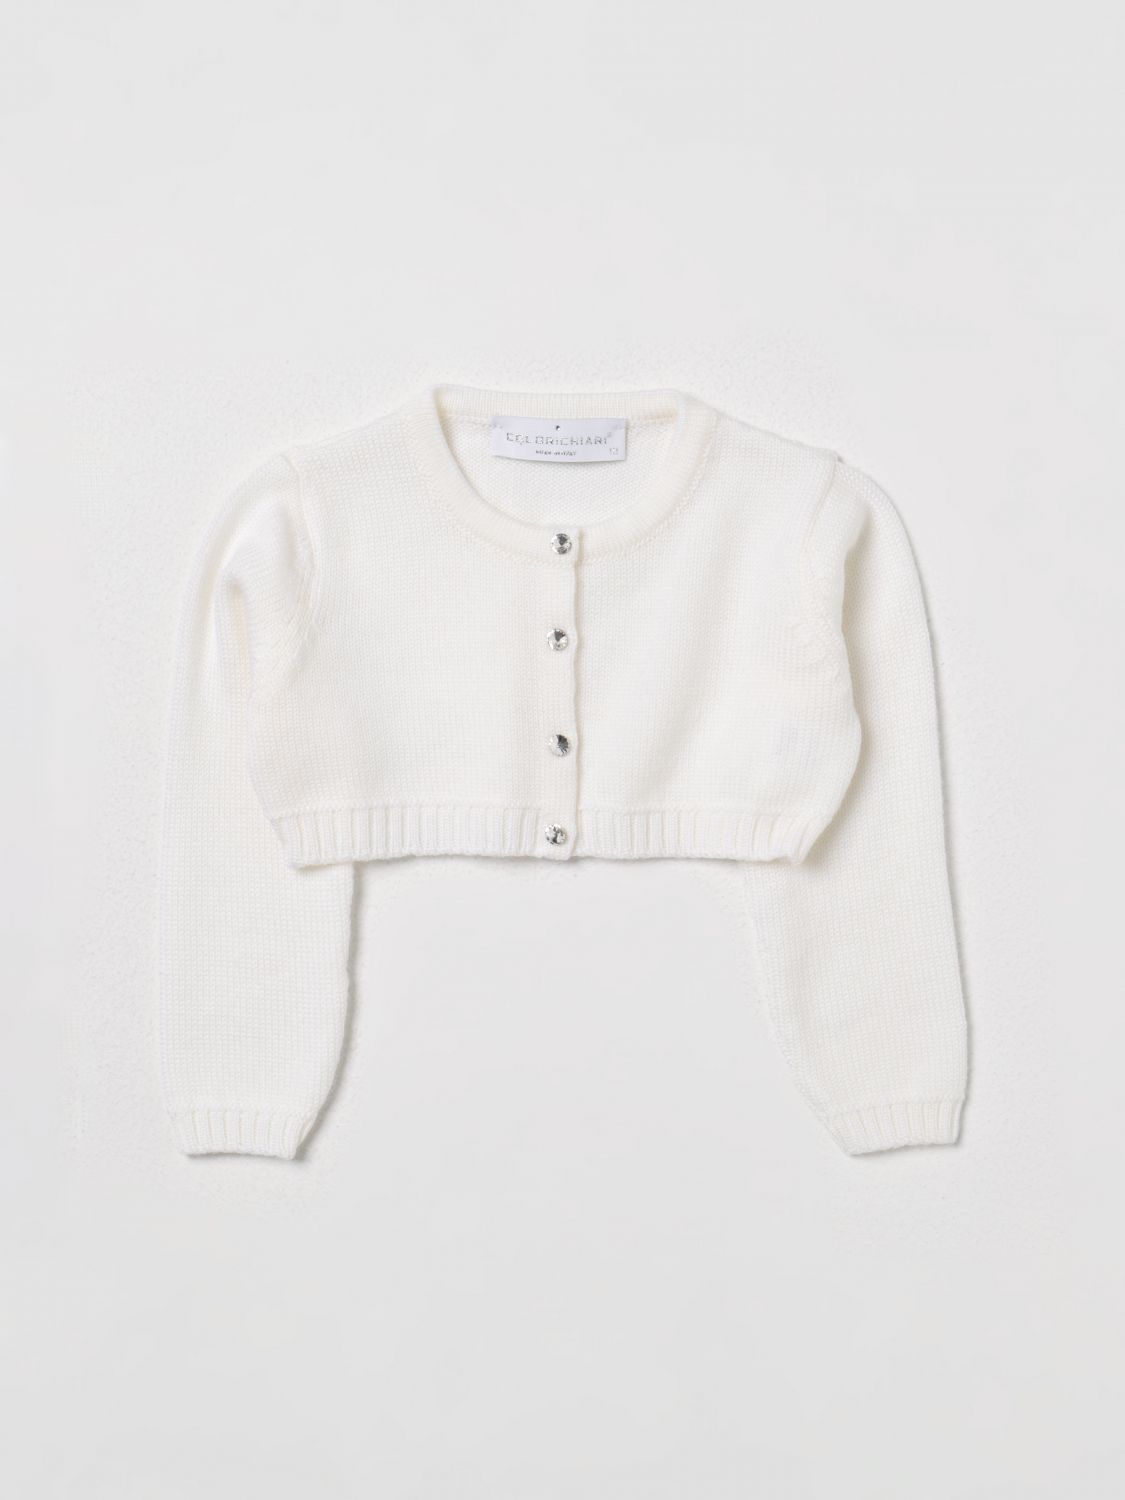 Colori Chiari Babies' Jacke  Kinder Farbe Weiss In White